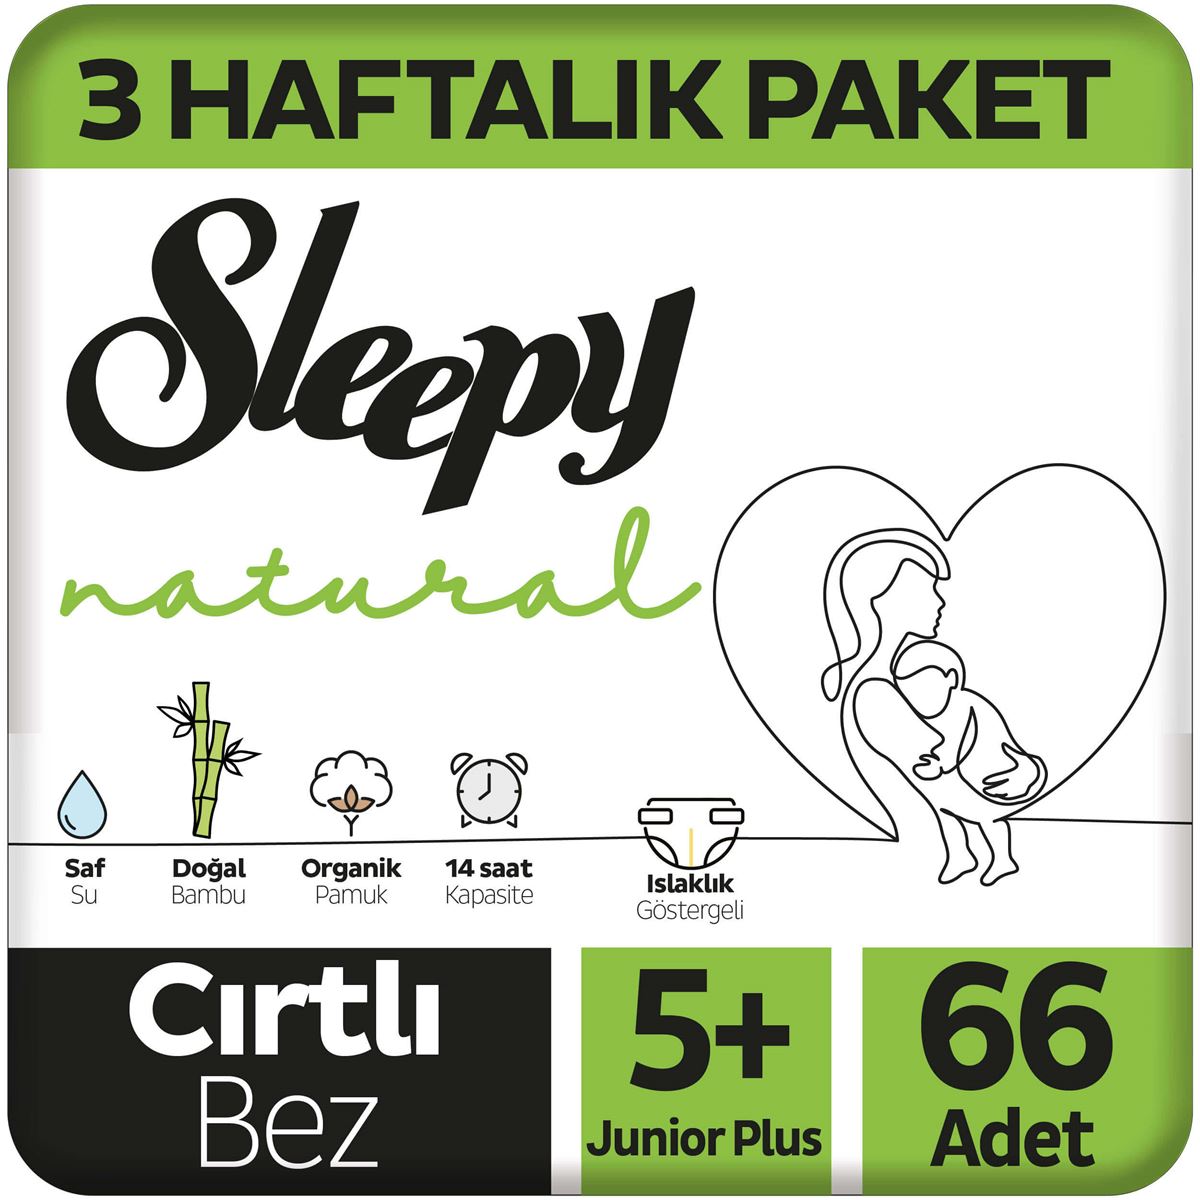 Sleepy Natural 3 Haftalık Paket Bebek Bezi 5+ Numara Junior Plus 66 Adet